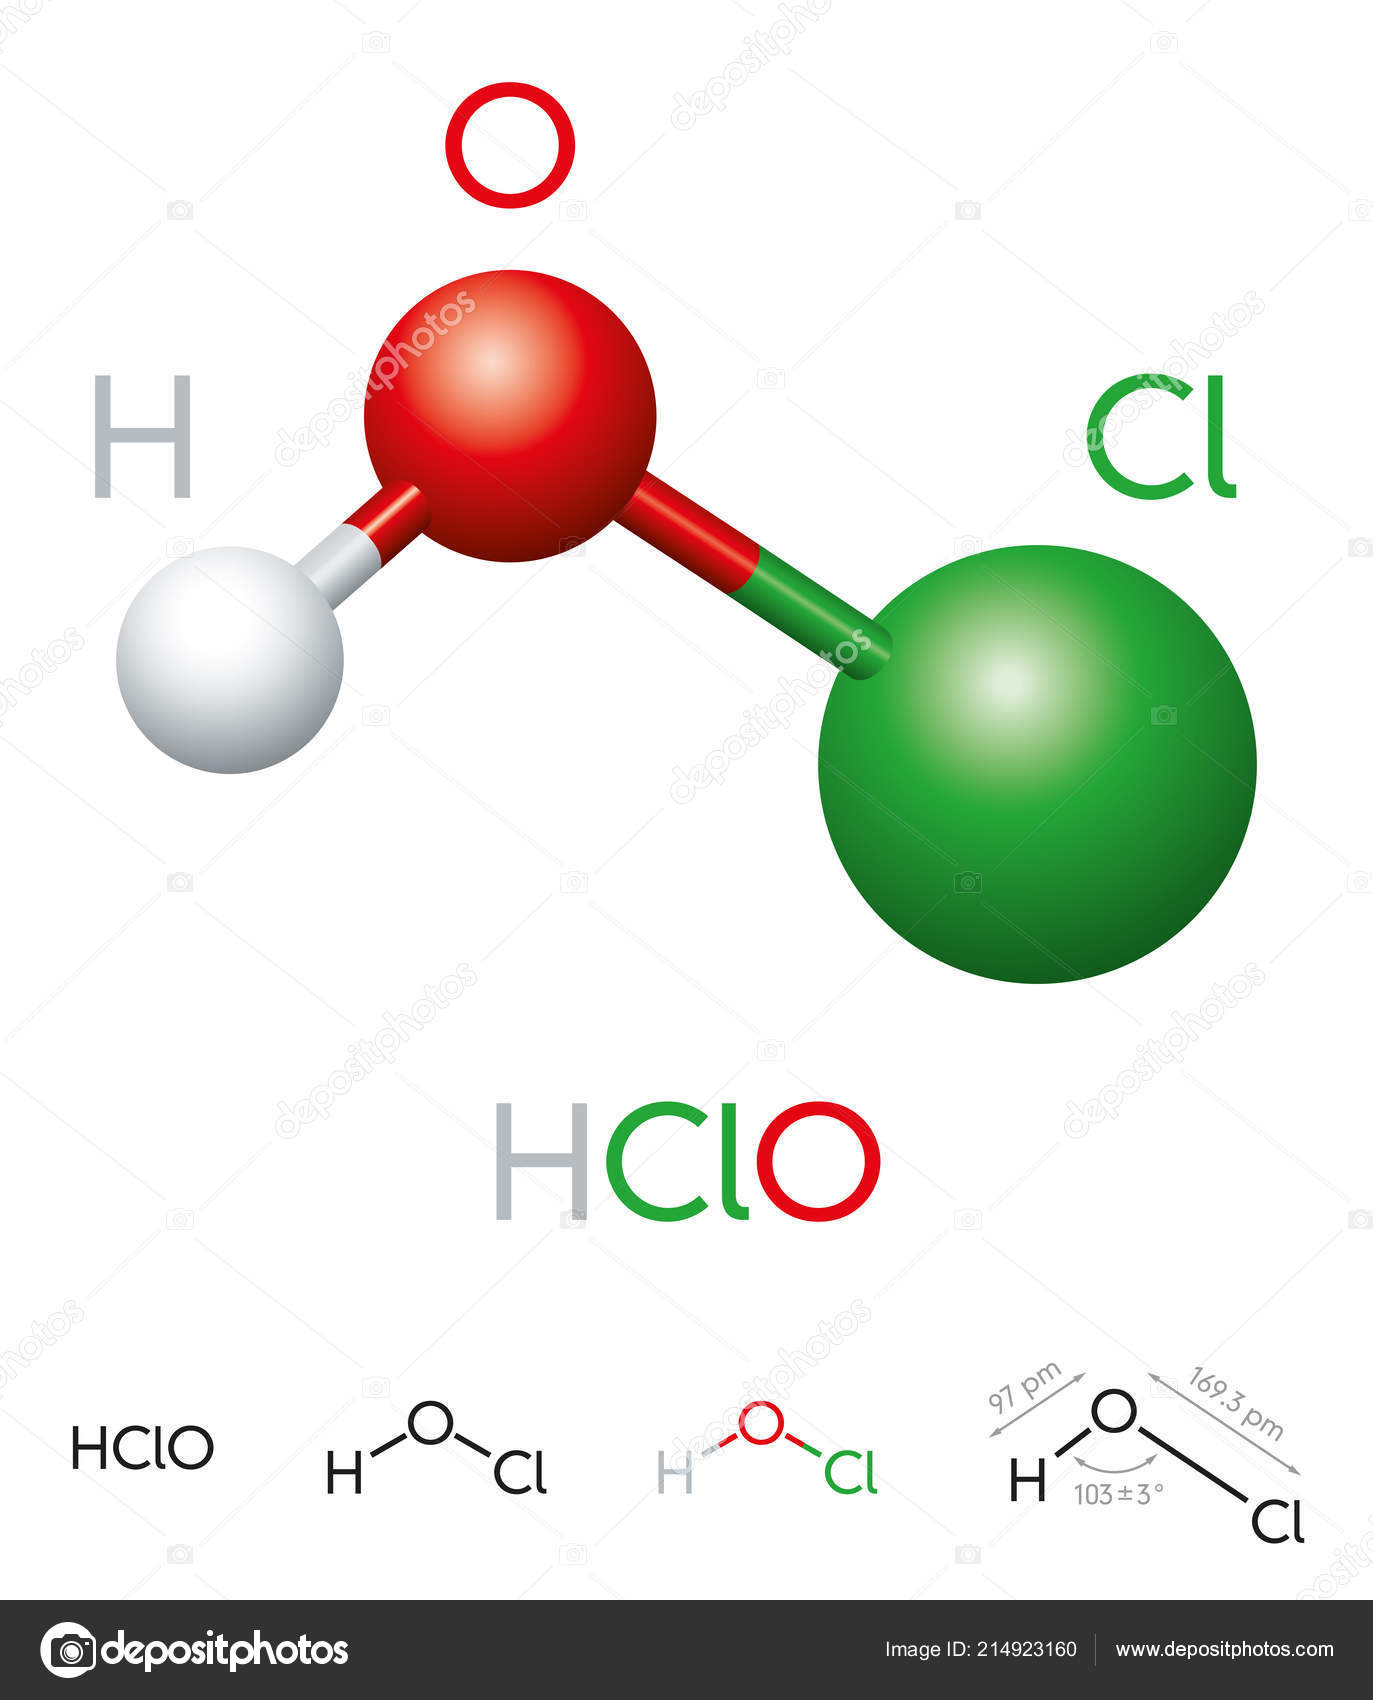 Hclo Ball And Stick Model Hclo Hypochlorous Acid Molecule Model Chemical Formula Ball Stick Model Stock Vector C Furian 214923160